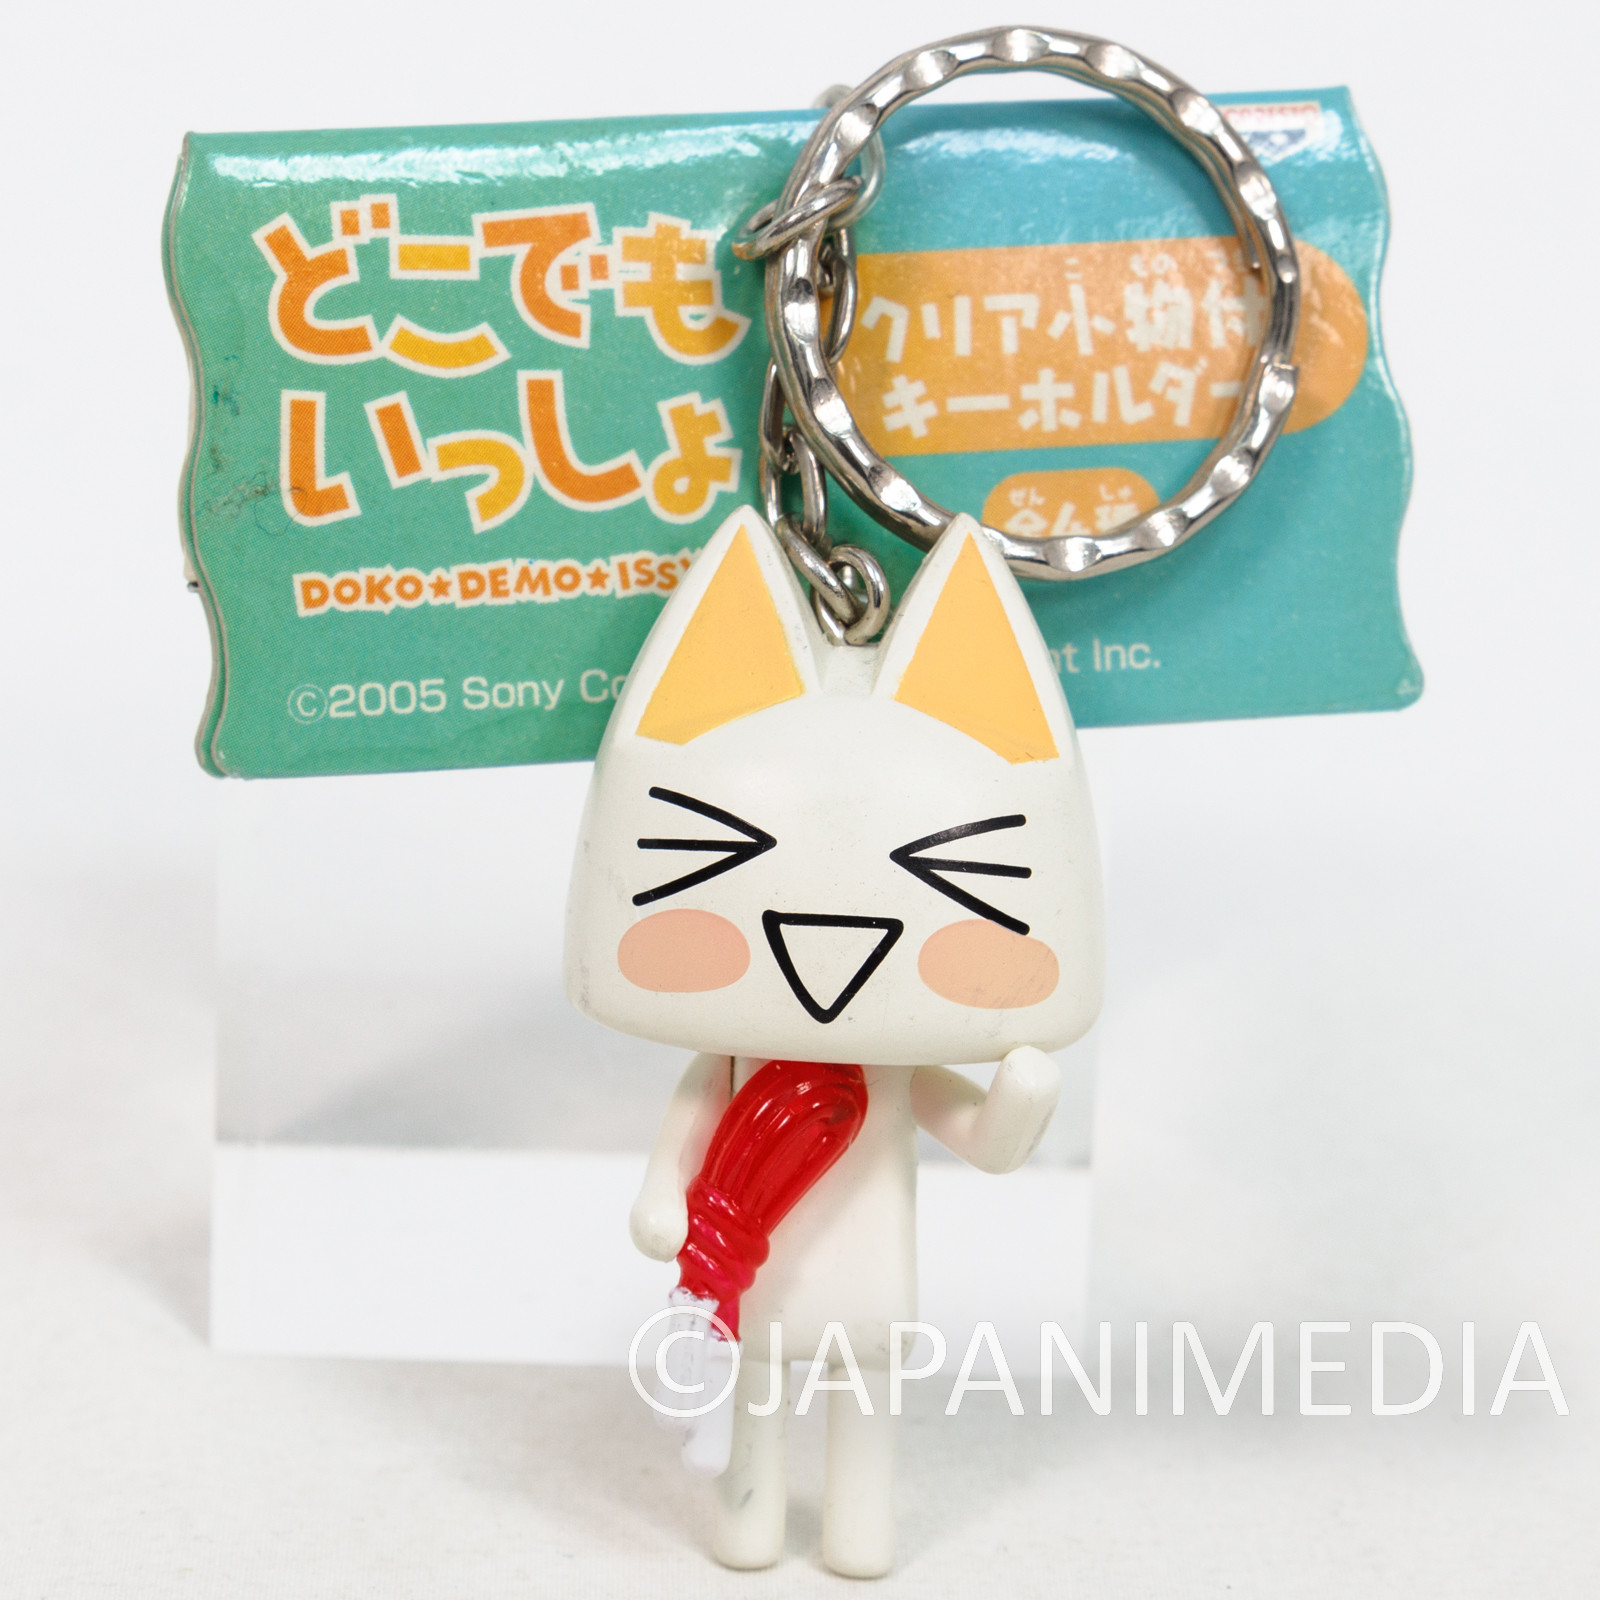 Sony Cat Doko Demo Issyo TORO INOUE Figure Keychain #1 Banpresto